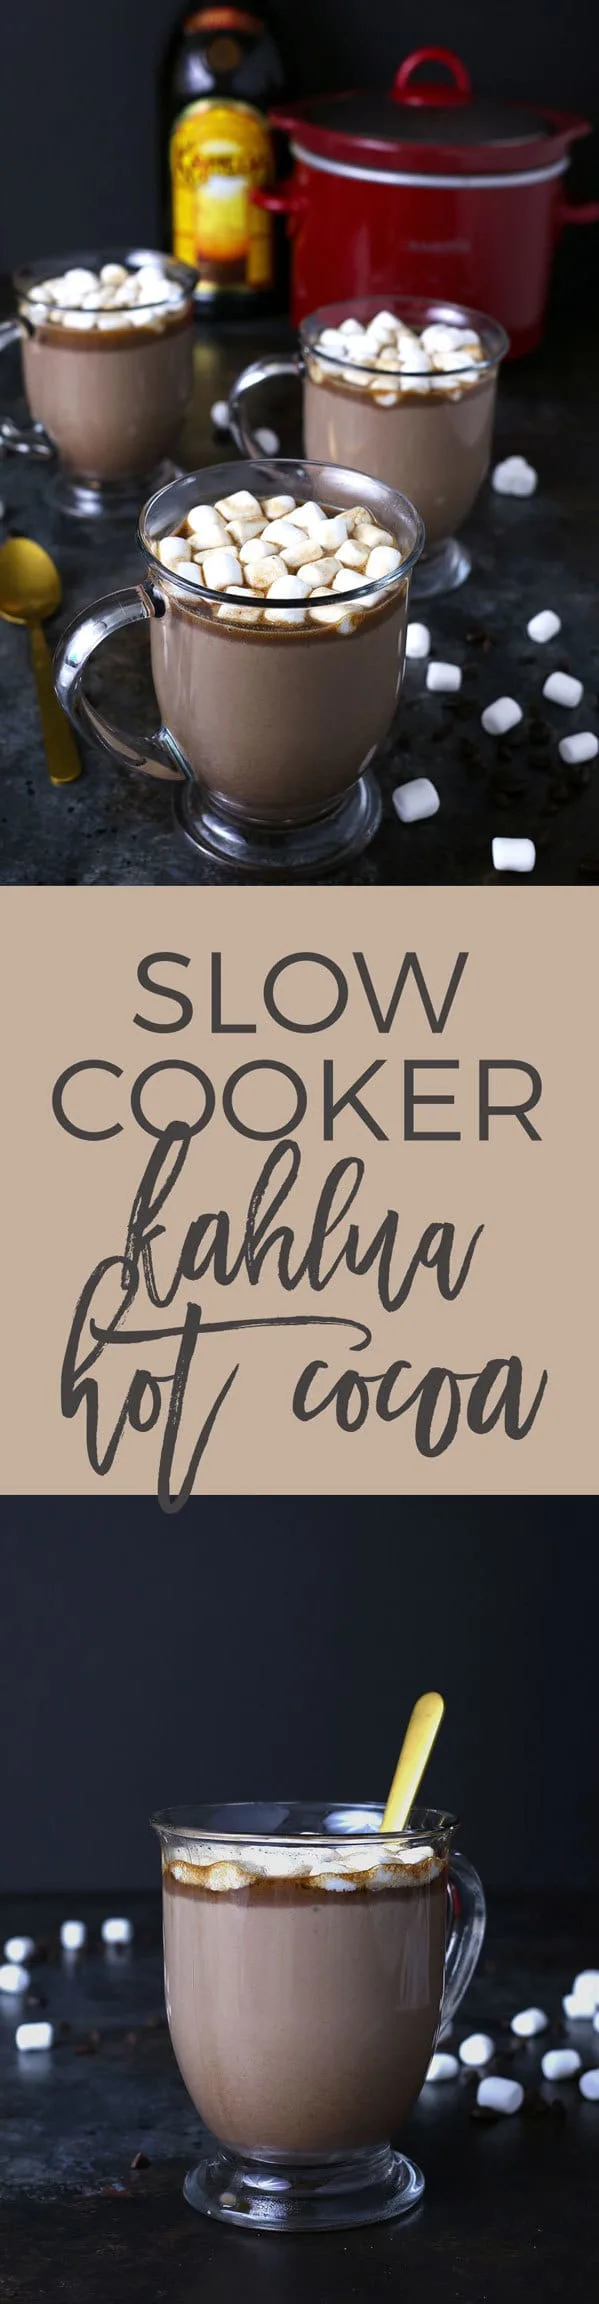 Slow cooker Kahlua hot cocoa pin